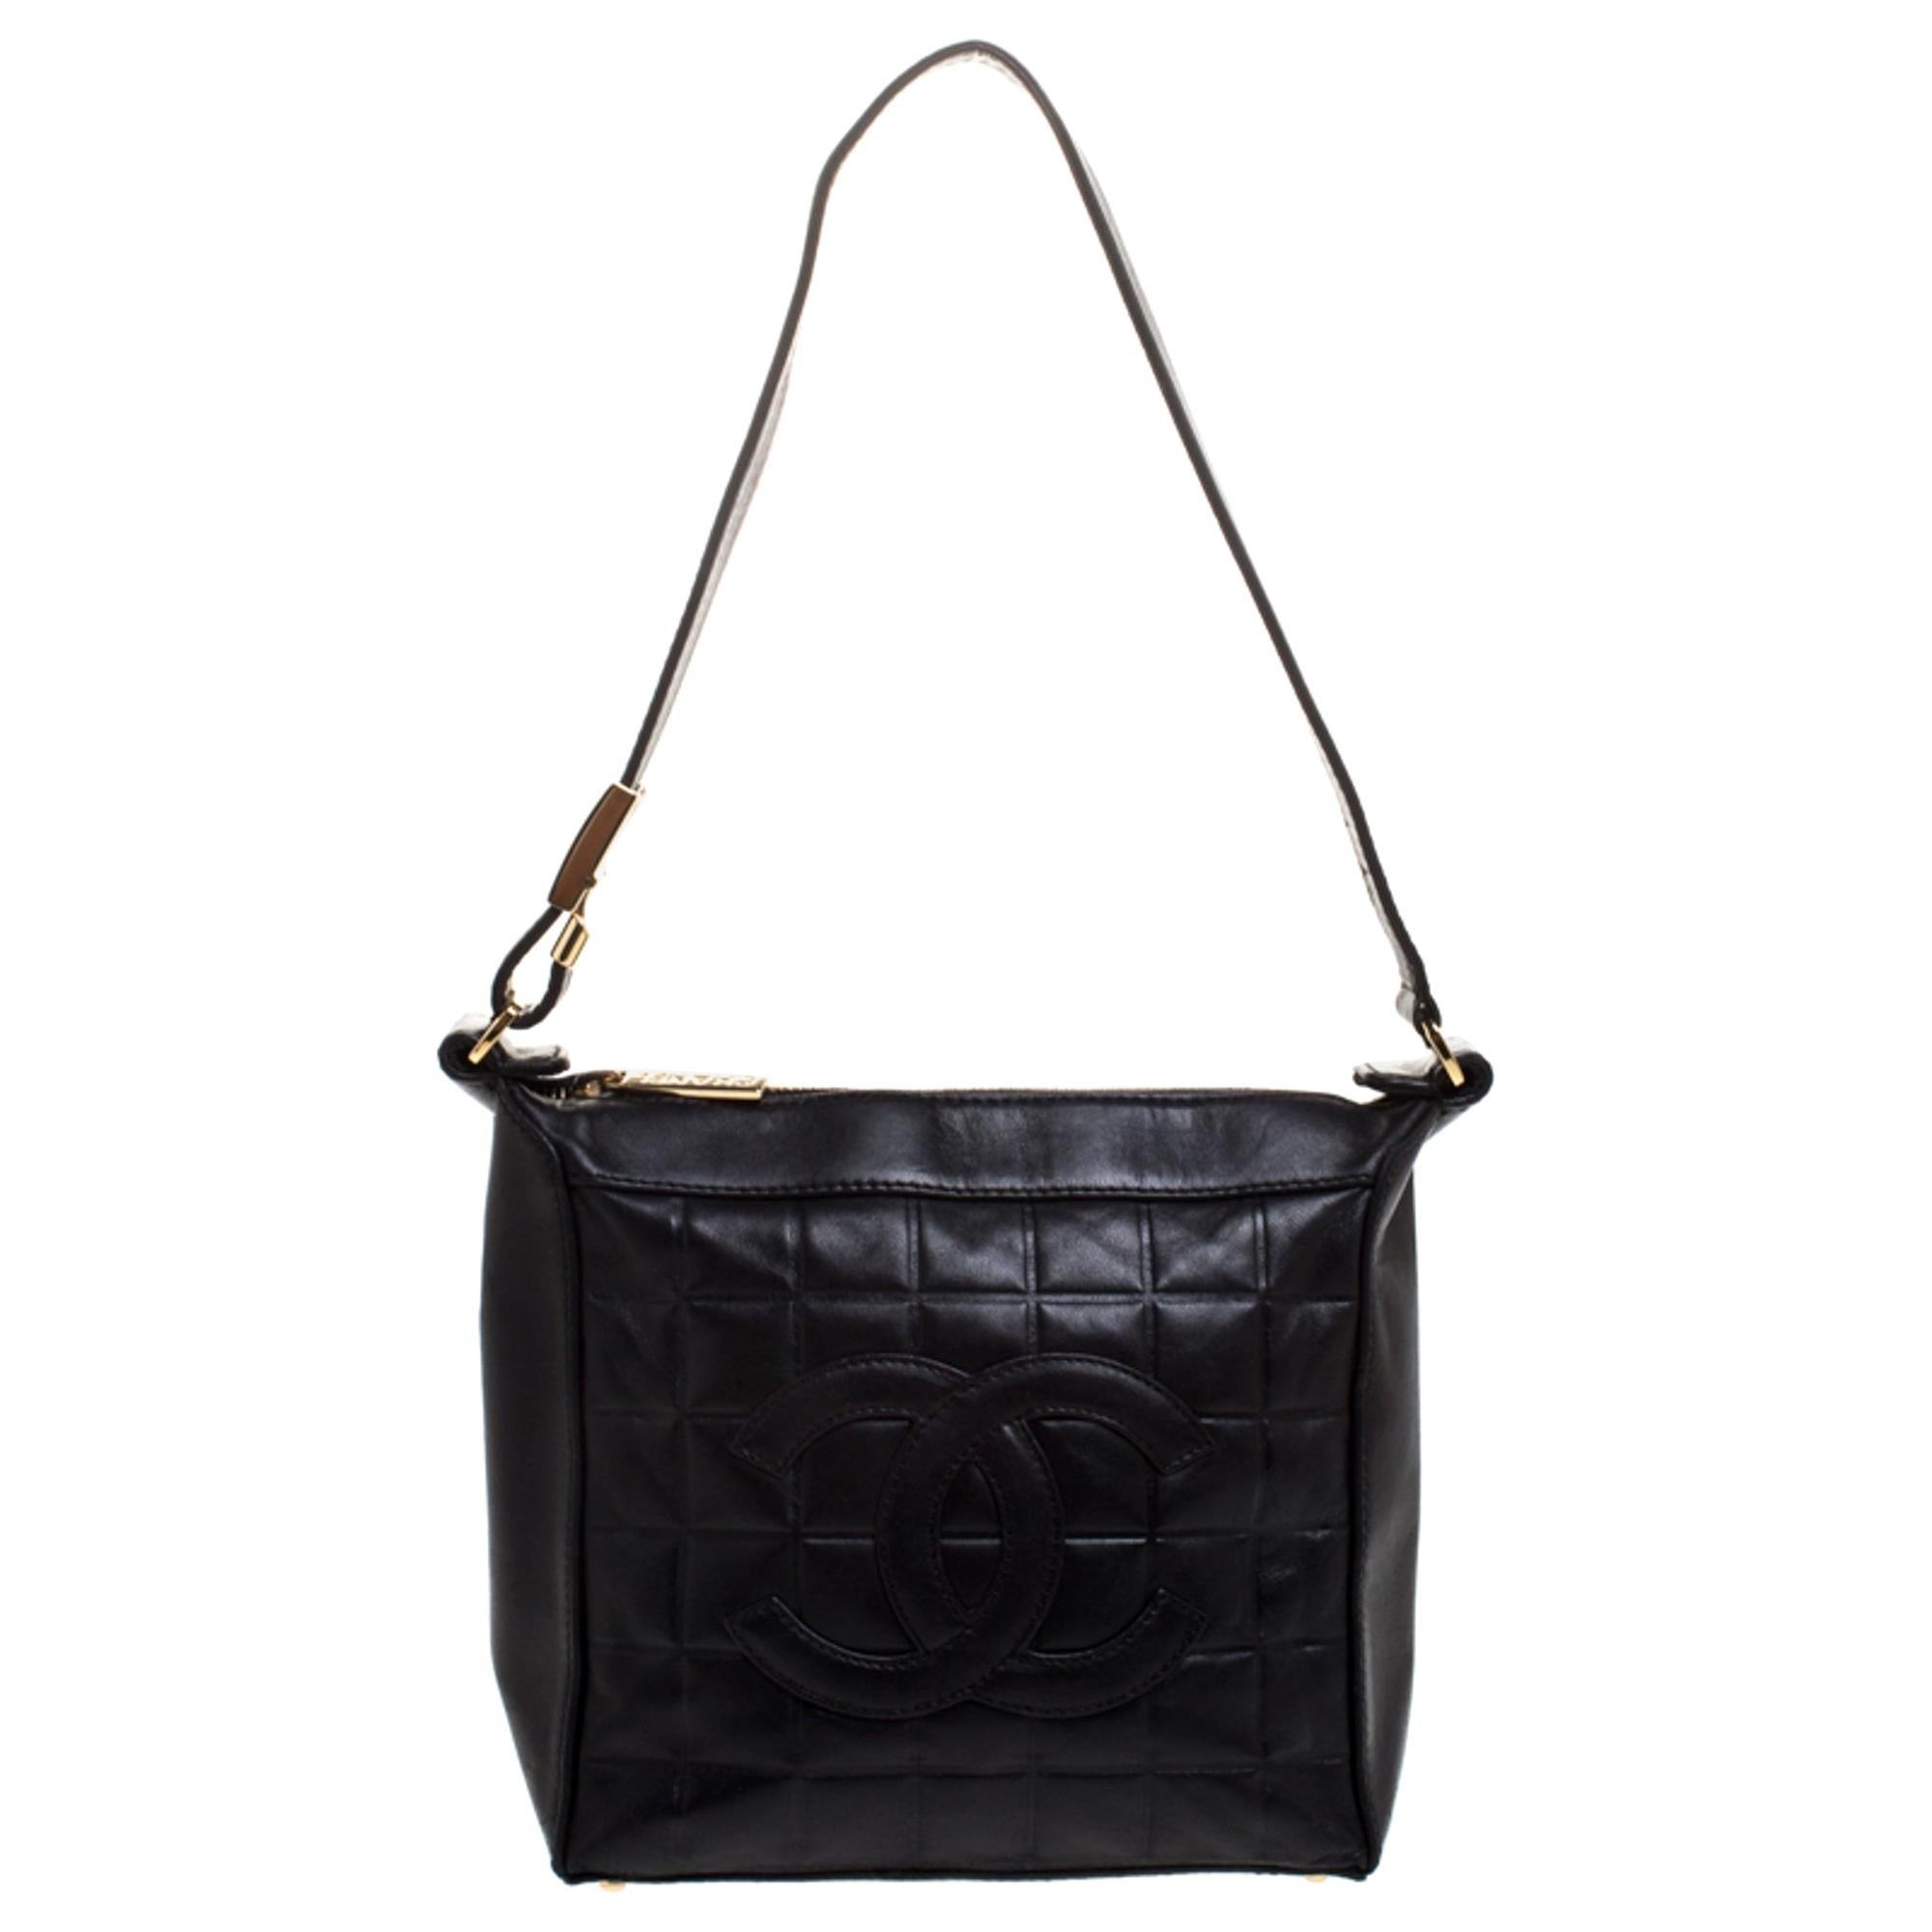 Chanel Black Leather Small Chocolate Bar Shoulder Bag